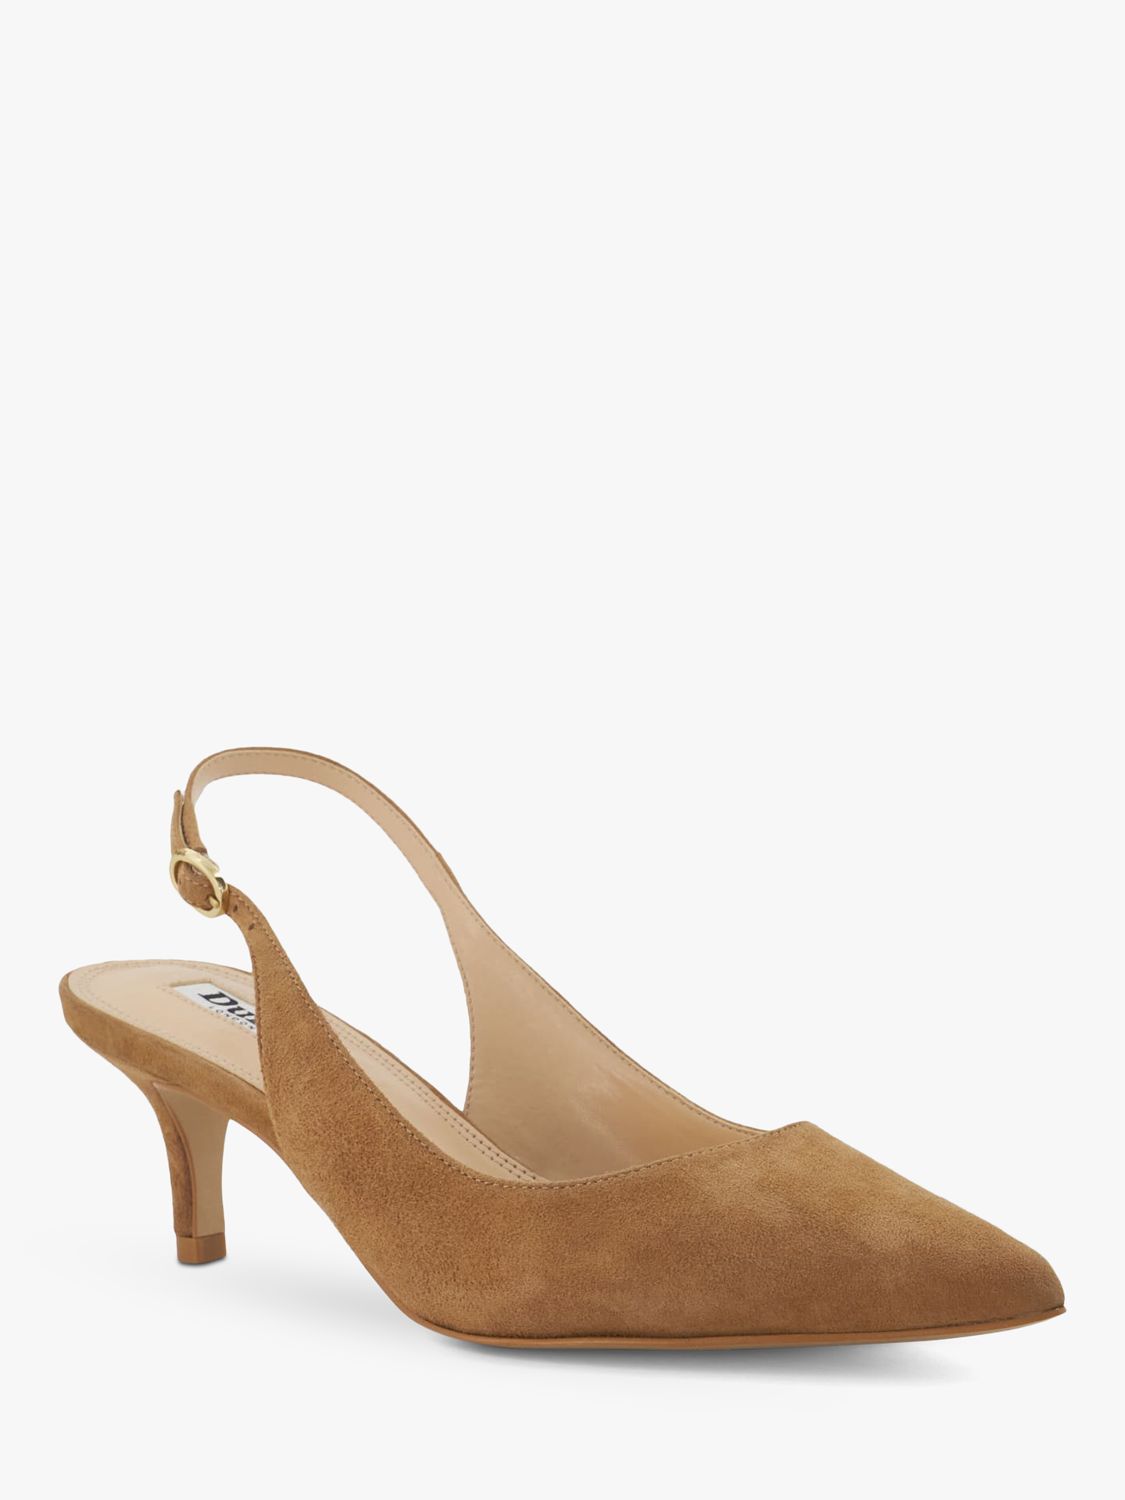 Dune Celini Suede Slingback Court Shoes, Camel, EU36